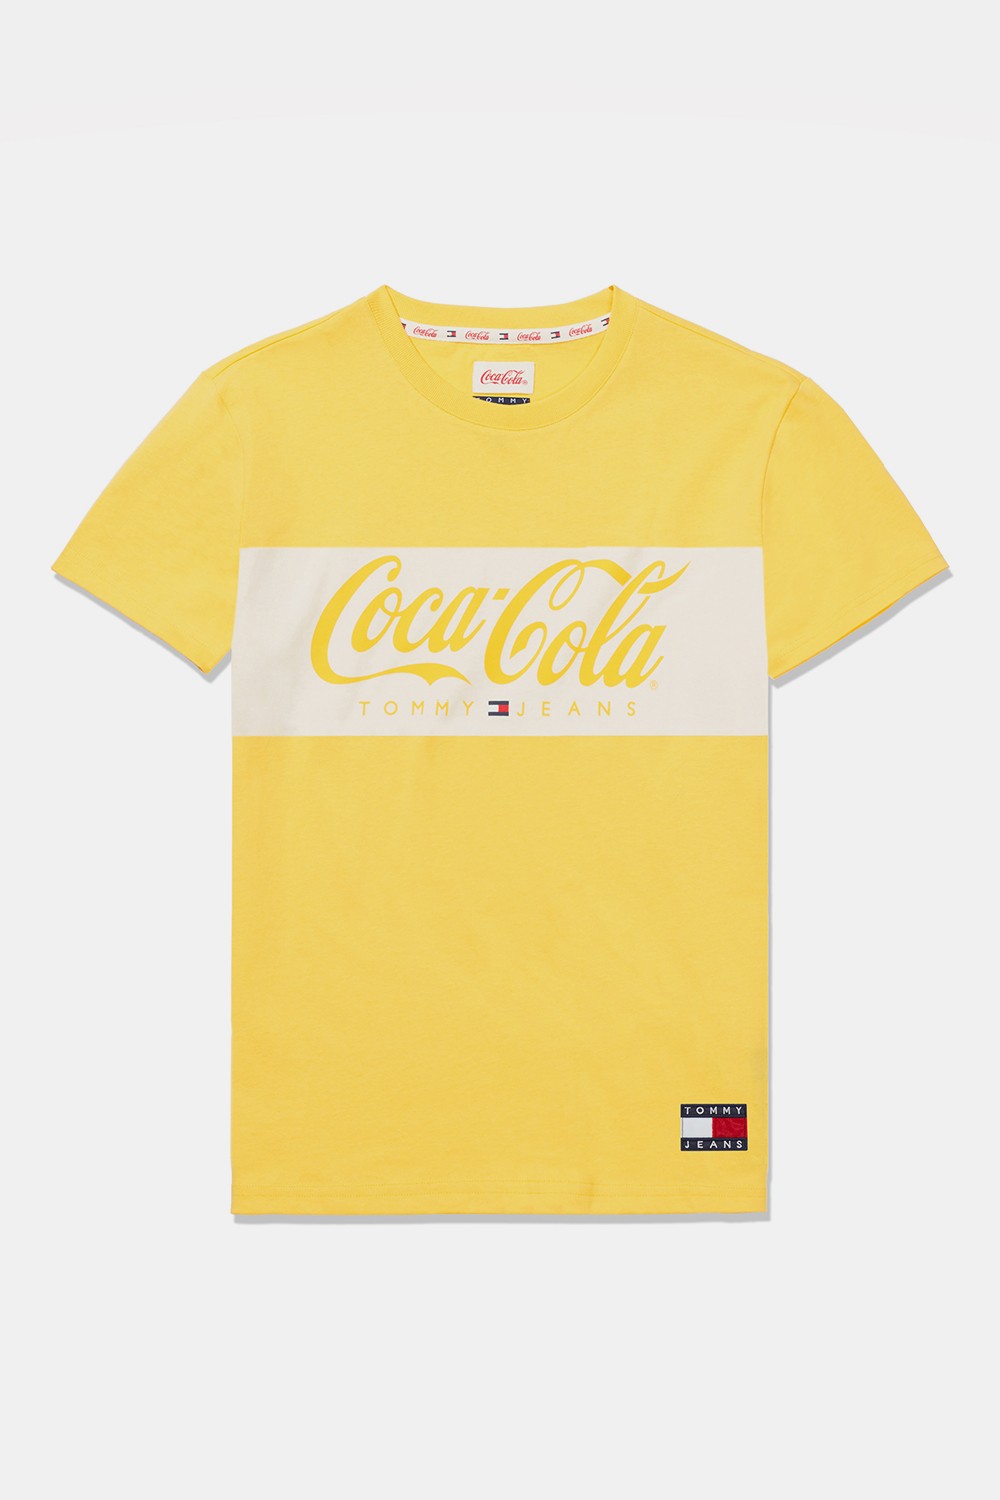 tommy coca cola shirt